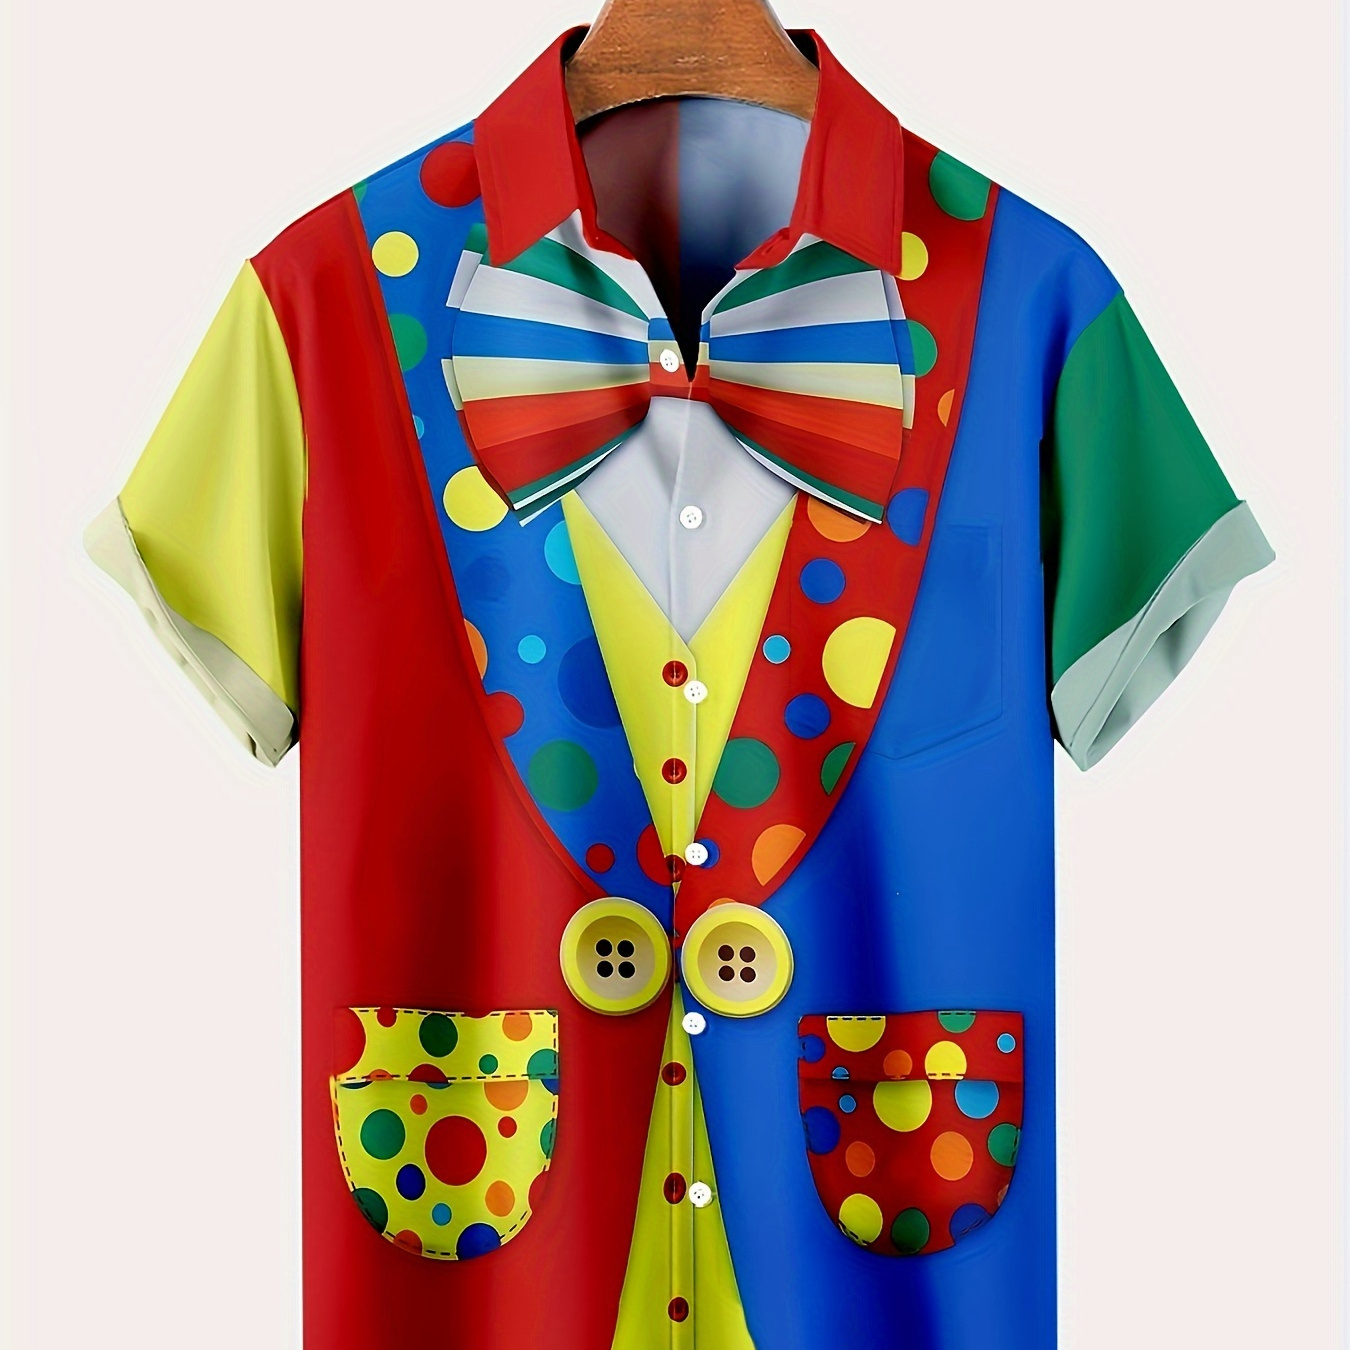 

Funny Color Block Bowtie Suit 3d Print Men's Short Sleeve Button Down Shirt For Summer Party Carnival